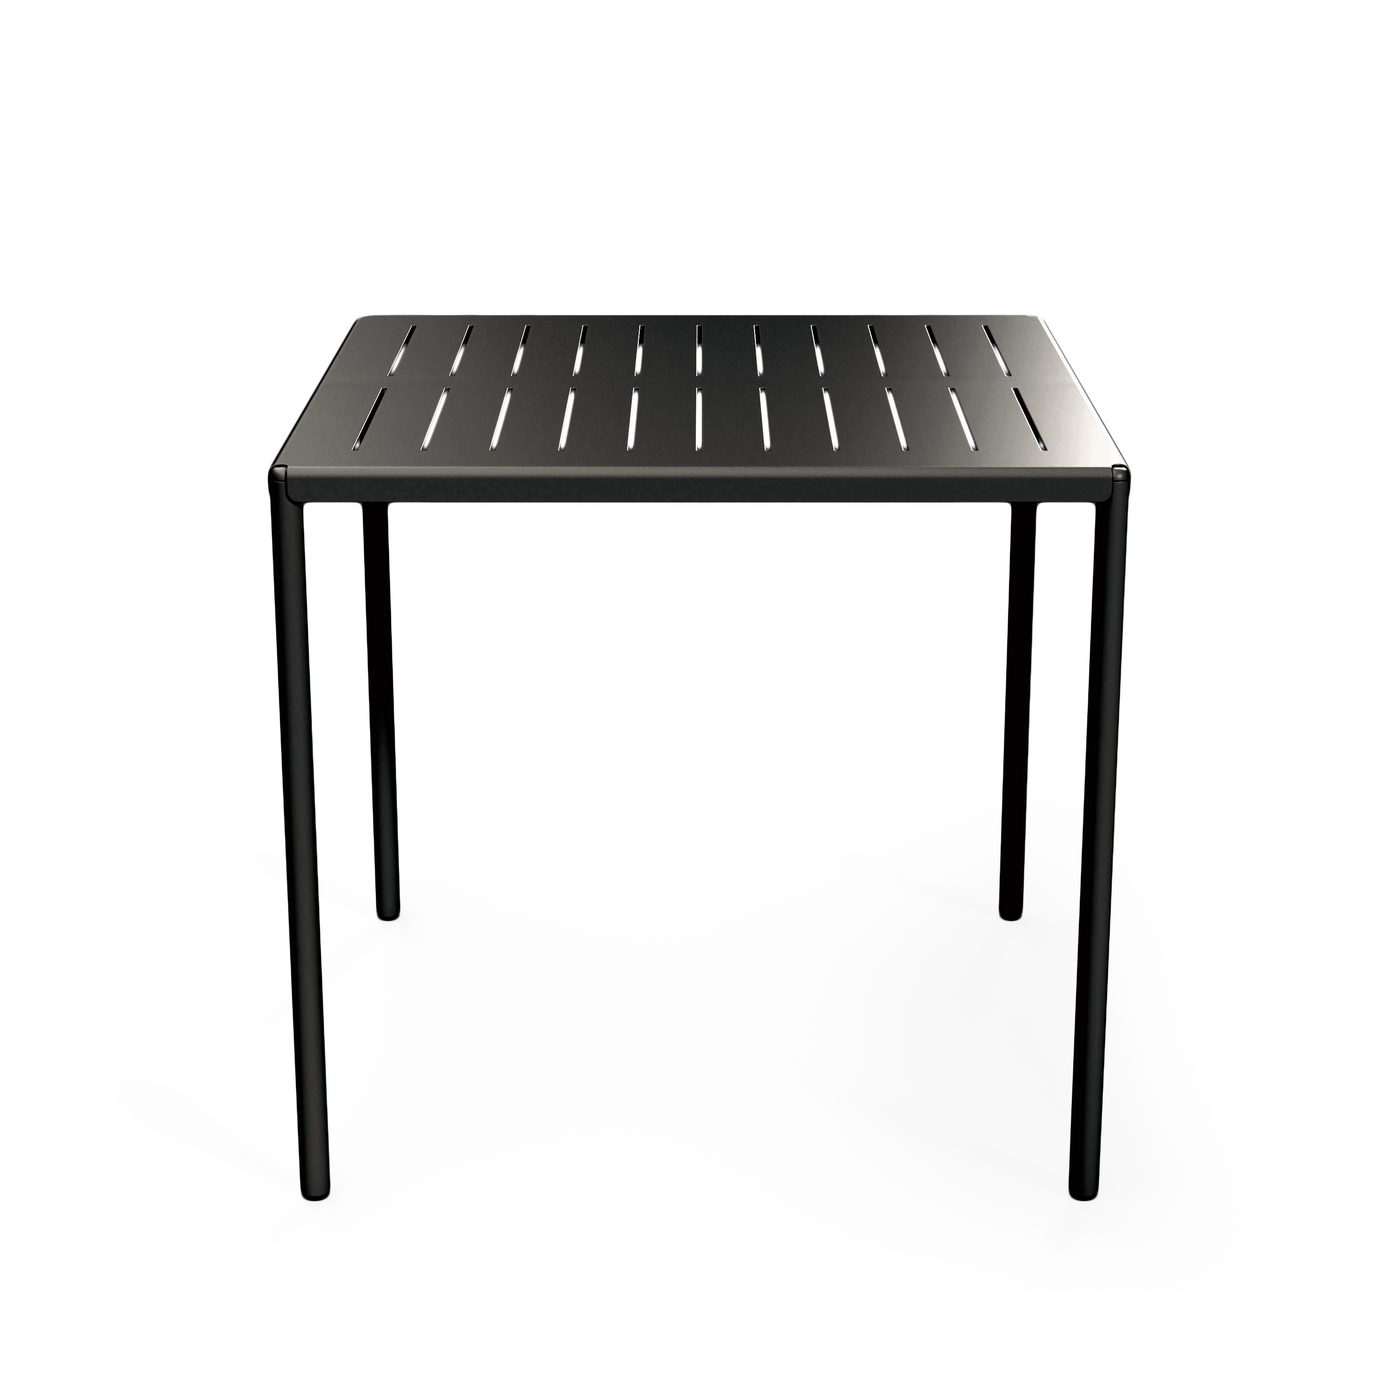 Frame Metal Garden Table, 4 Seater, Black